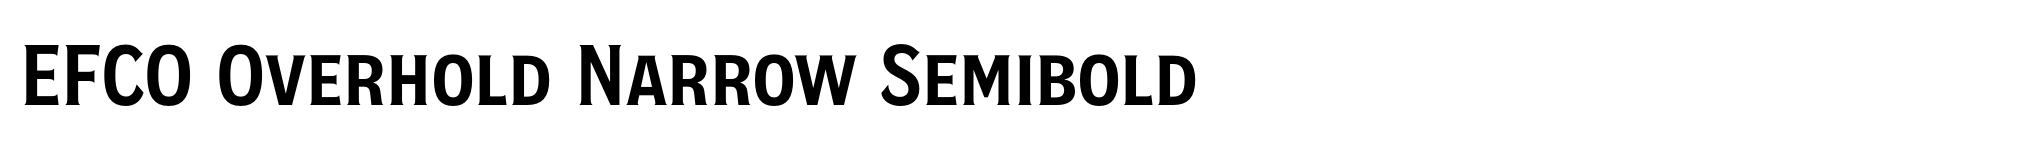 EFCO Overhold Narrow Semibold image